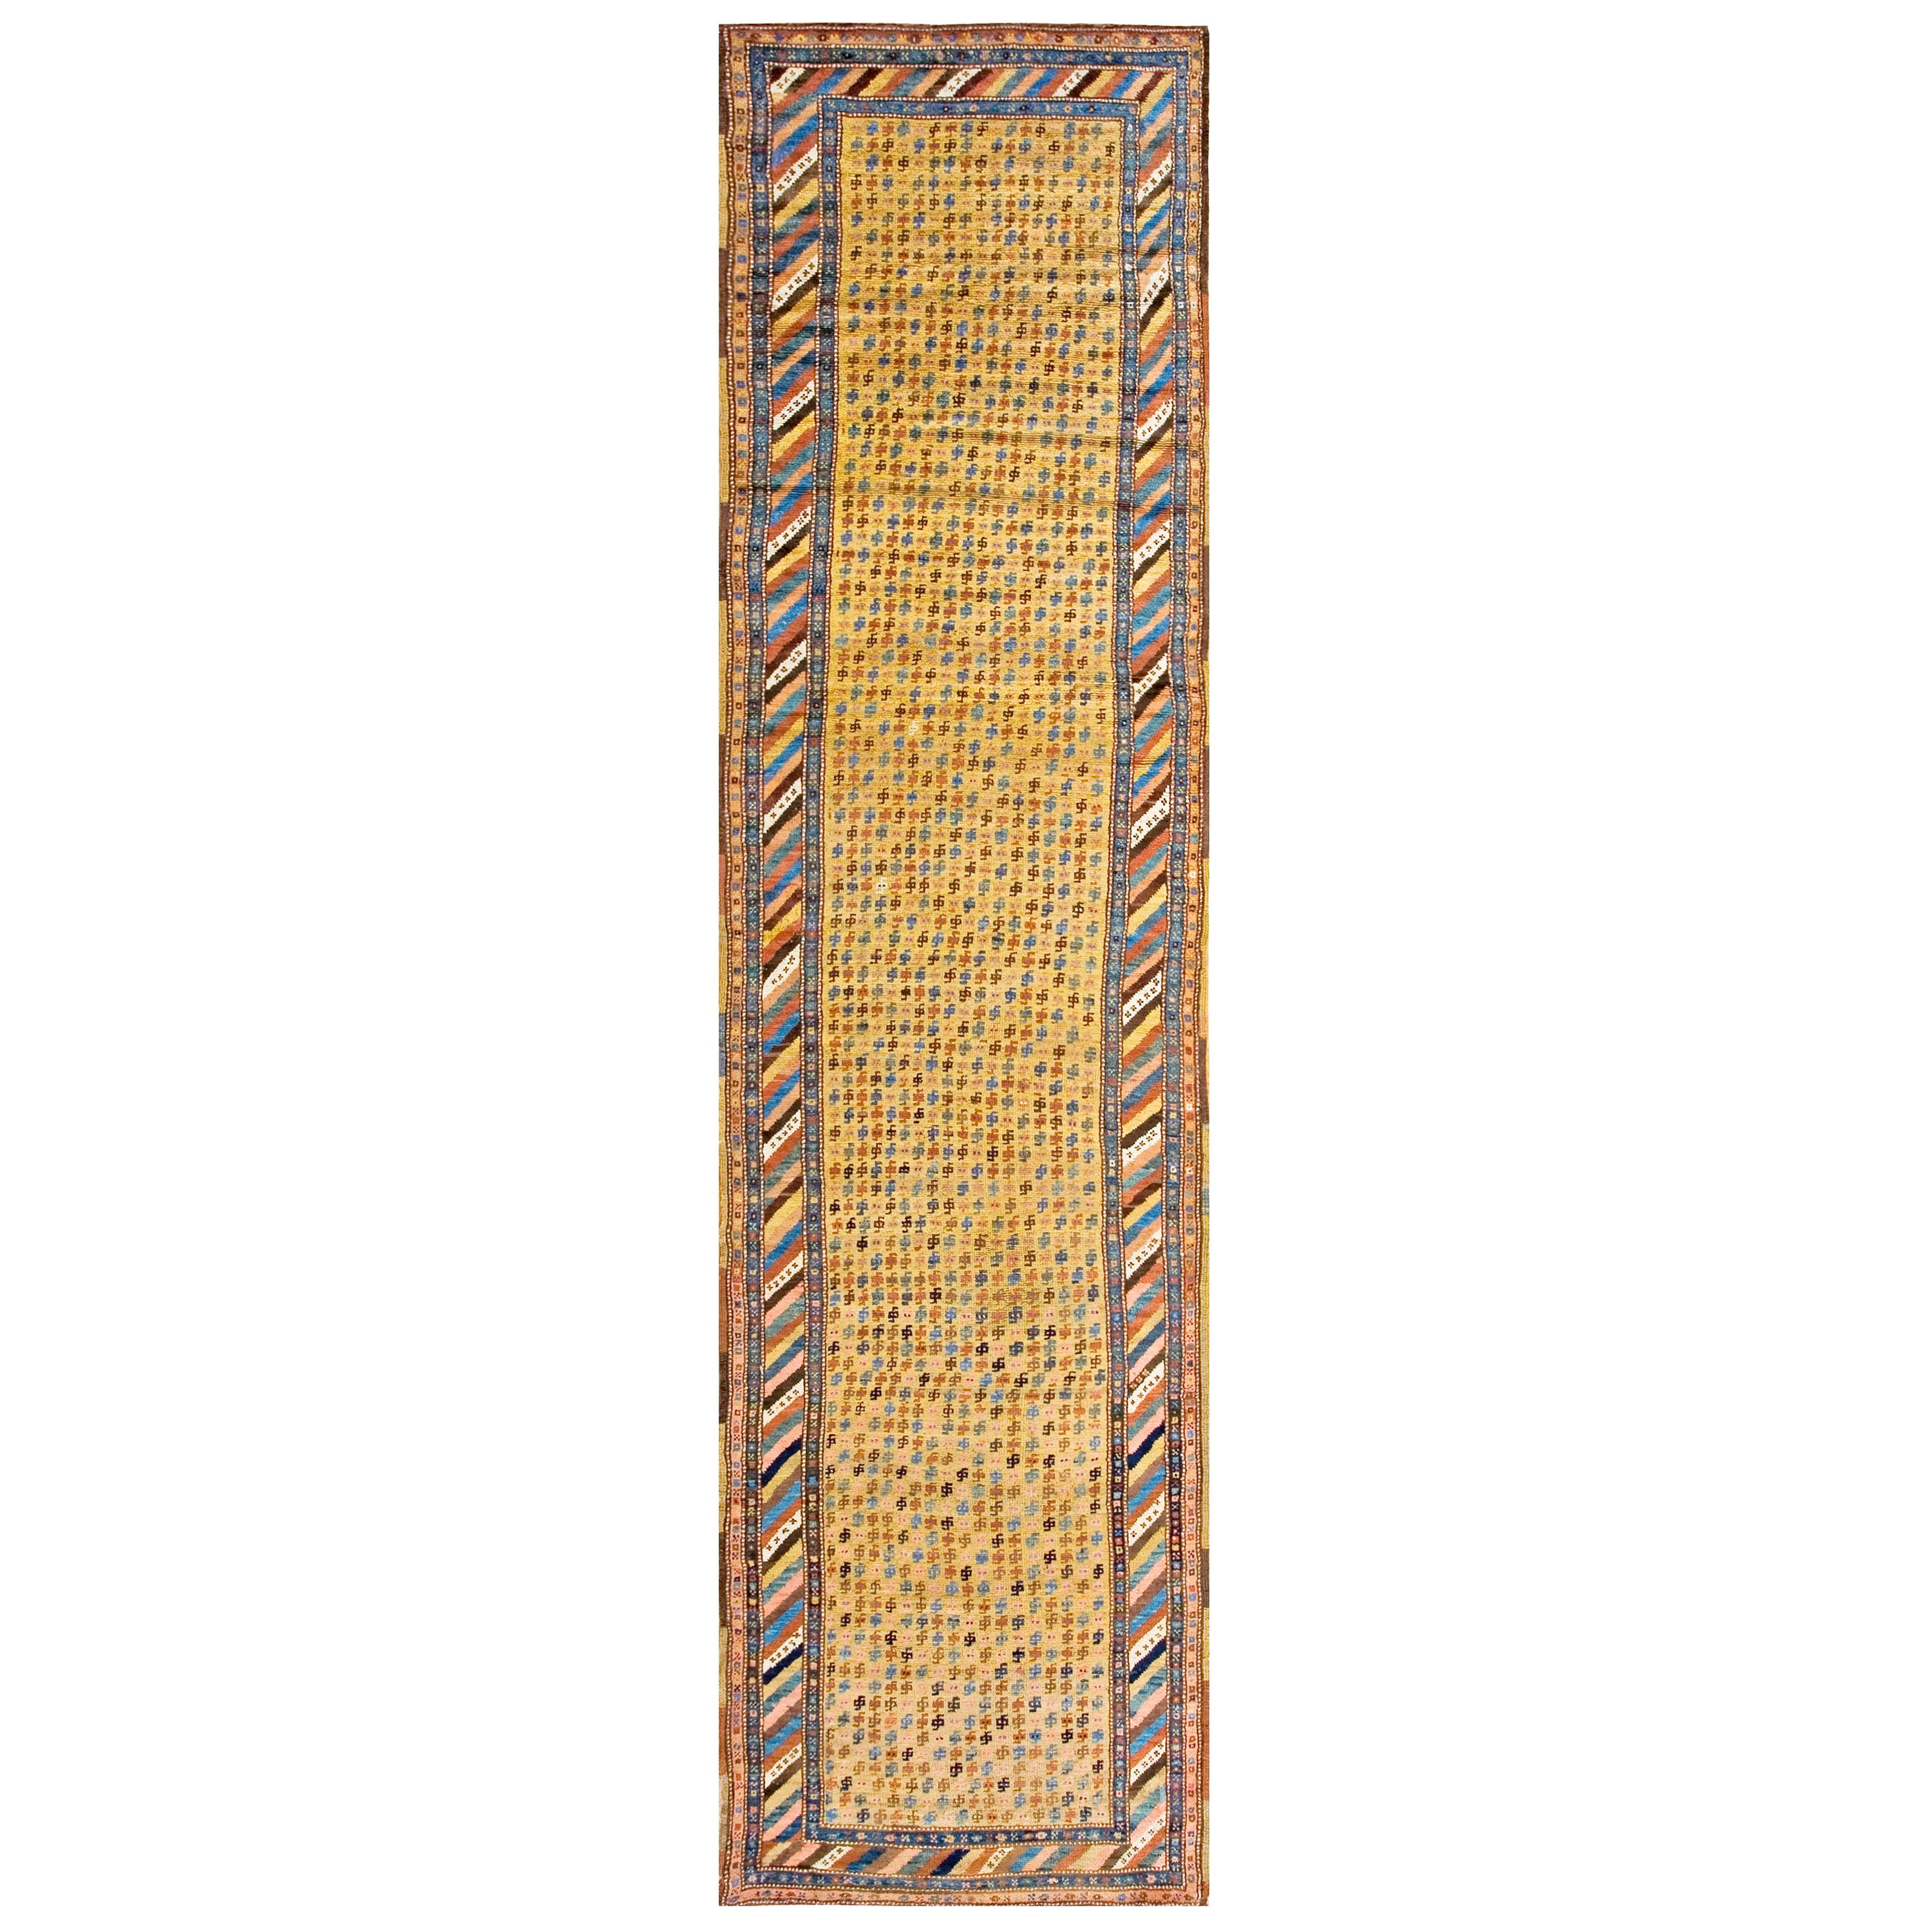 19th Century W. Persian Kurdish Carpet ( 3'6" x13'7" - 107 x 414 )